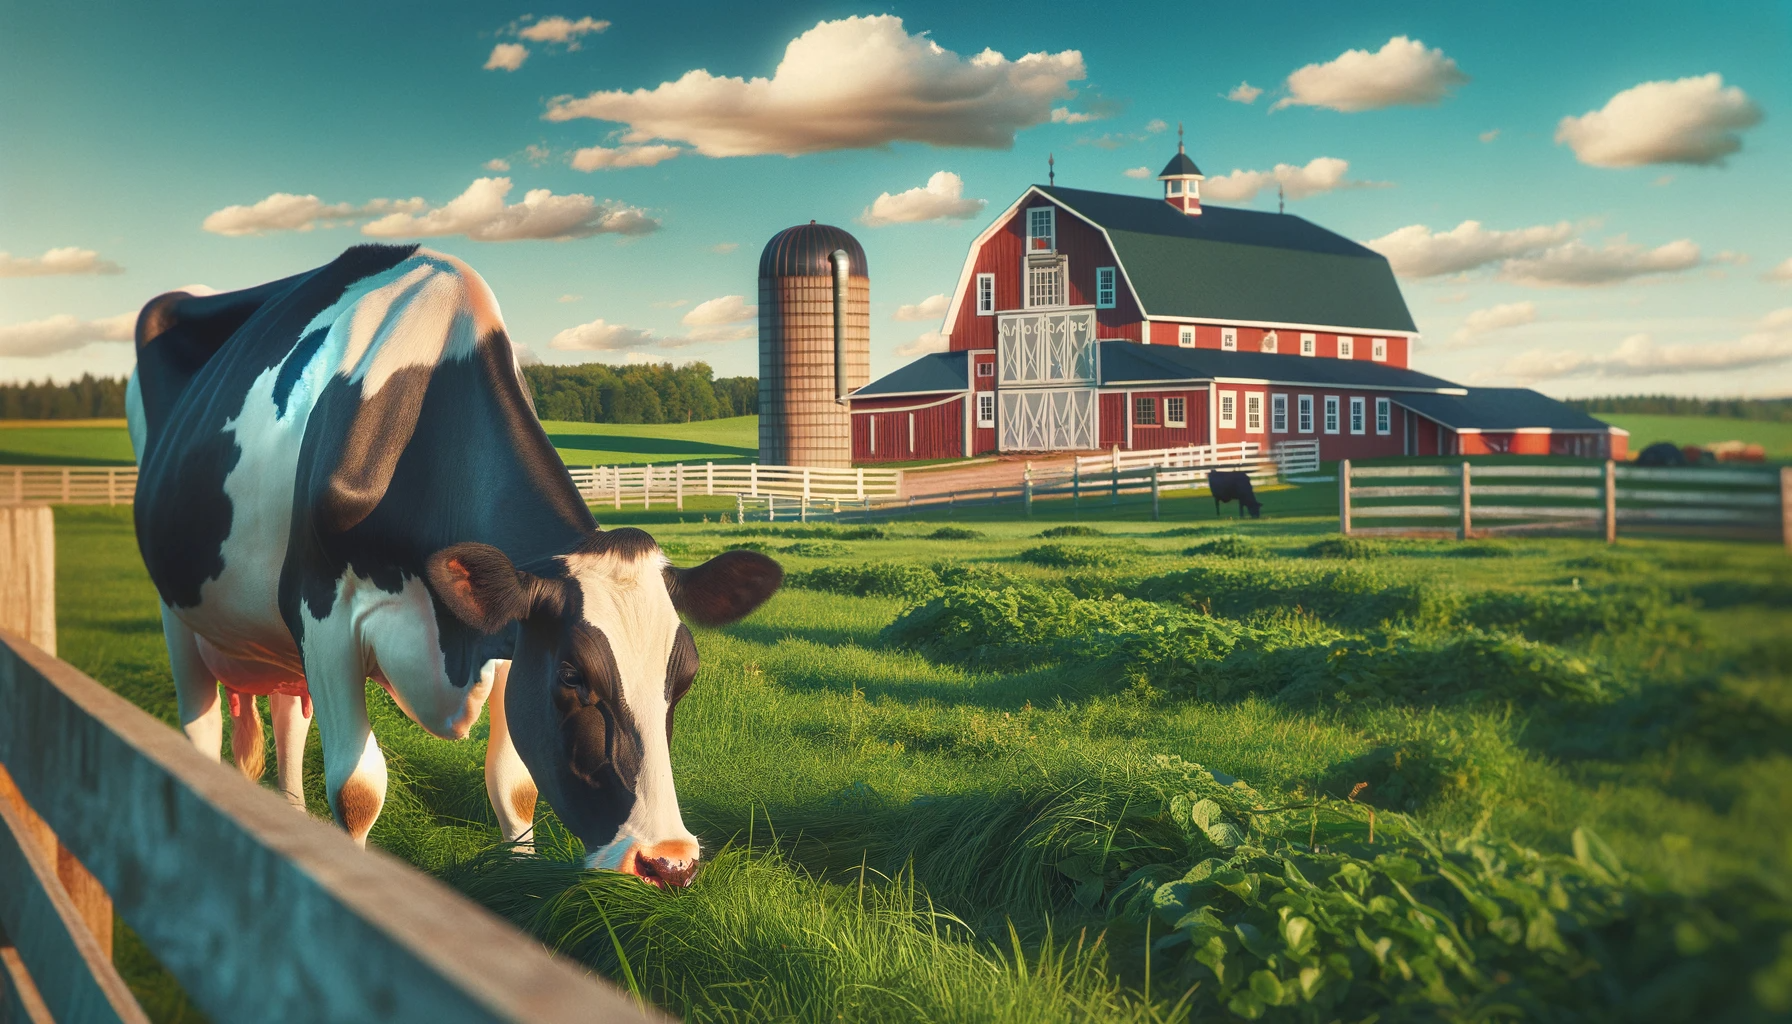 A_serene_farm_setting_featuring_a_dairy_cow